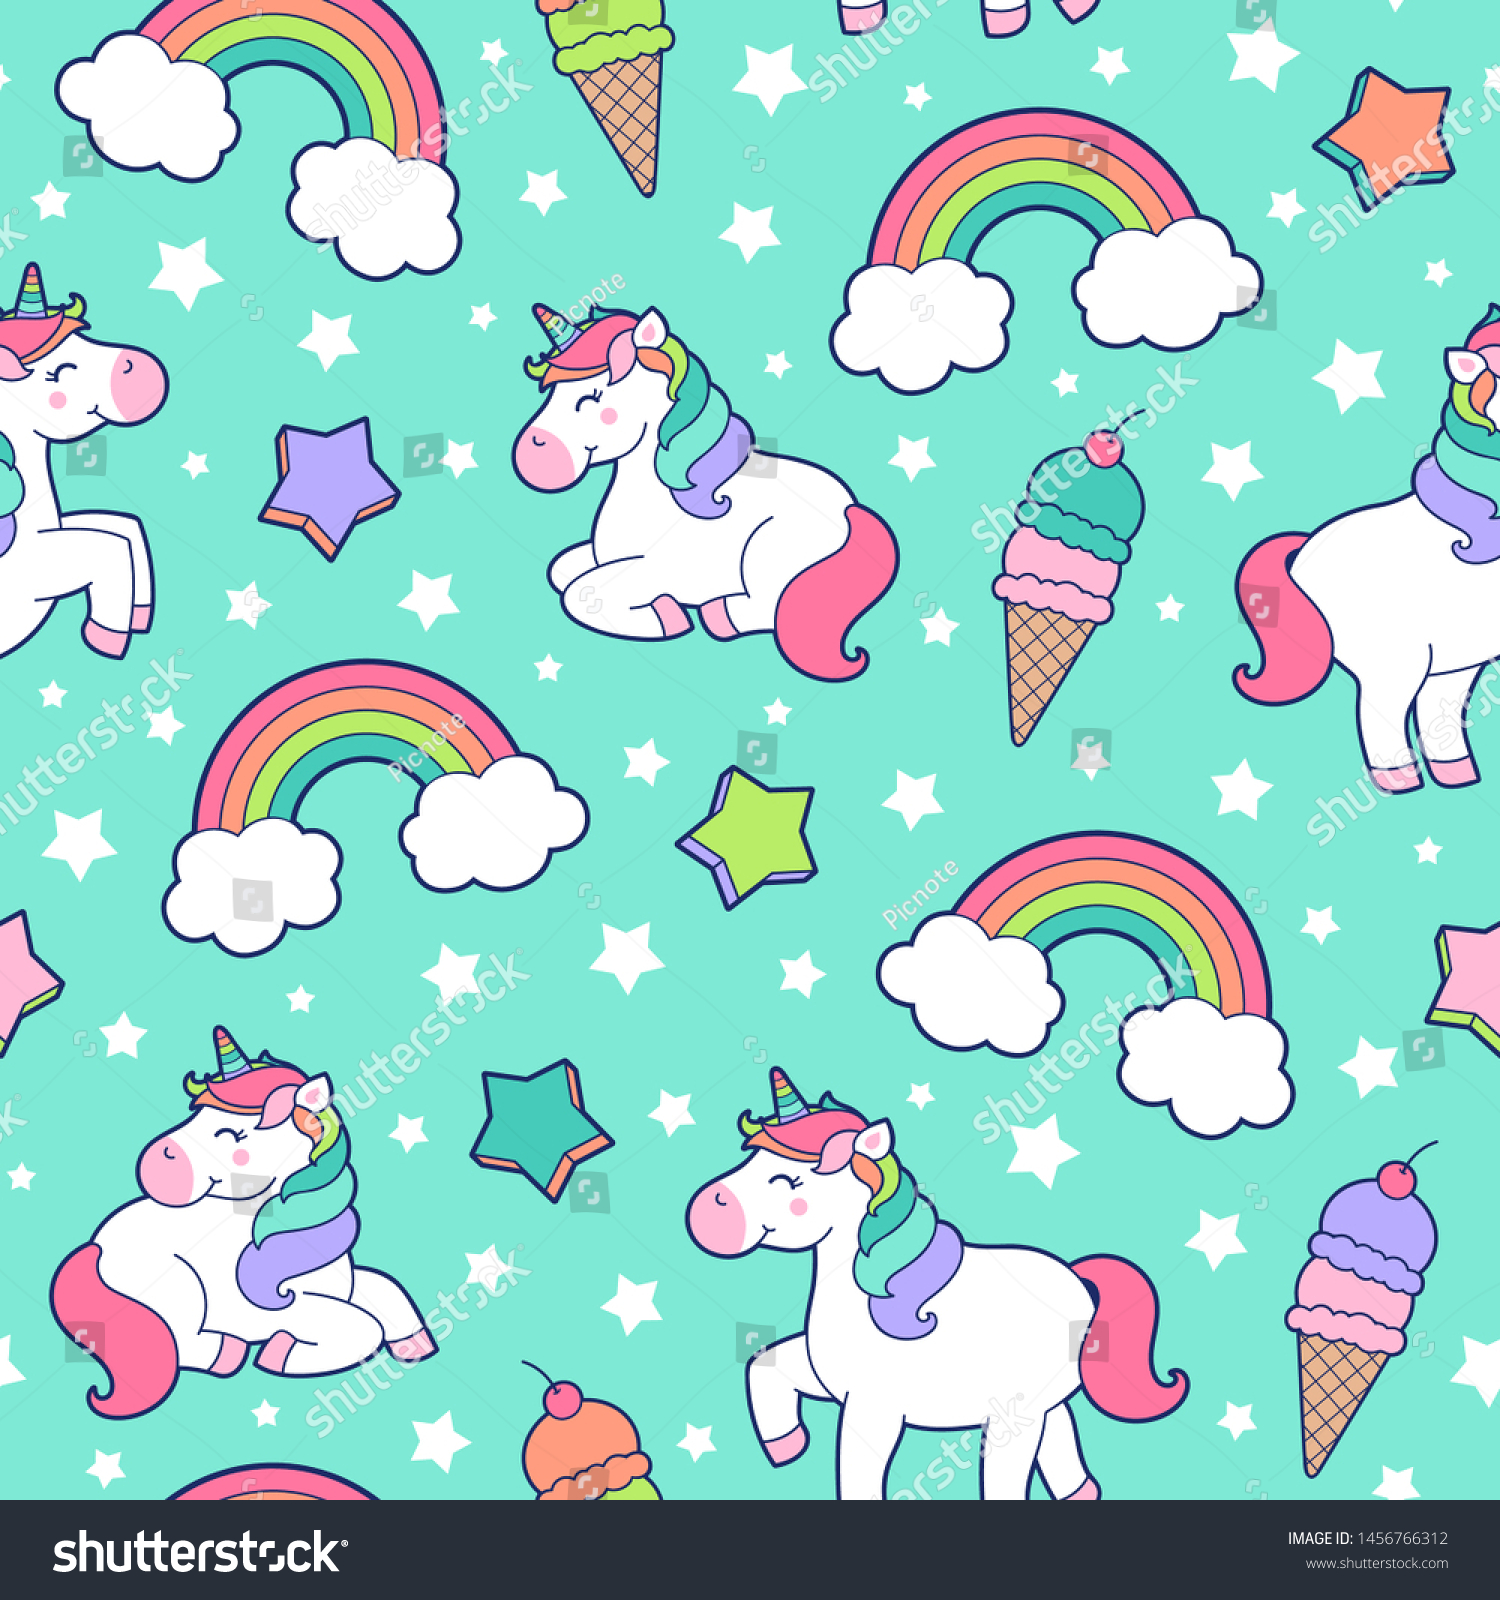 Cute Unicorn Rainbow Star Ice Cream のベクター画像素材 ロイヤリティフリー 1456766312